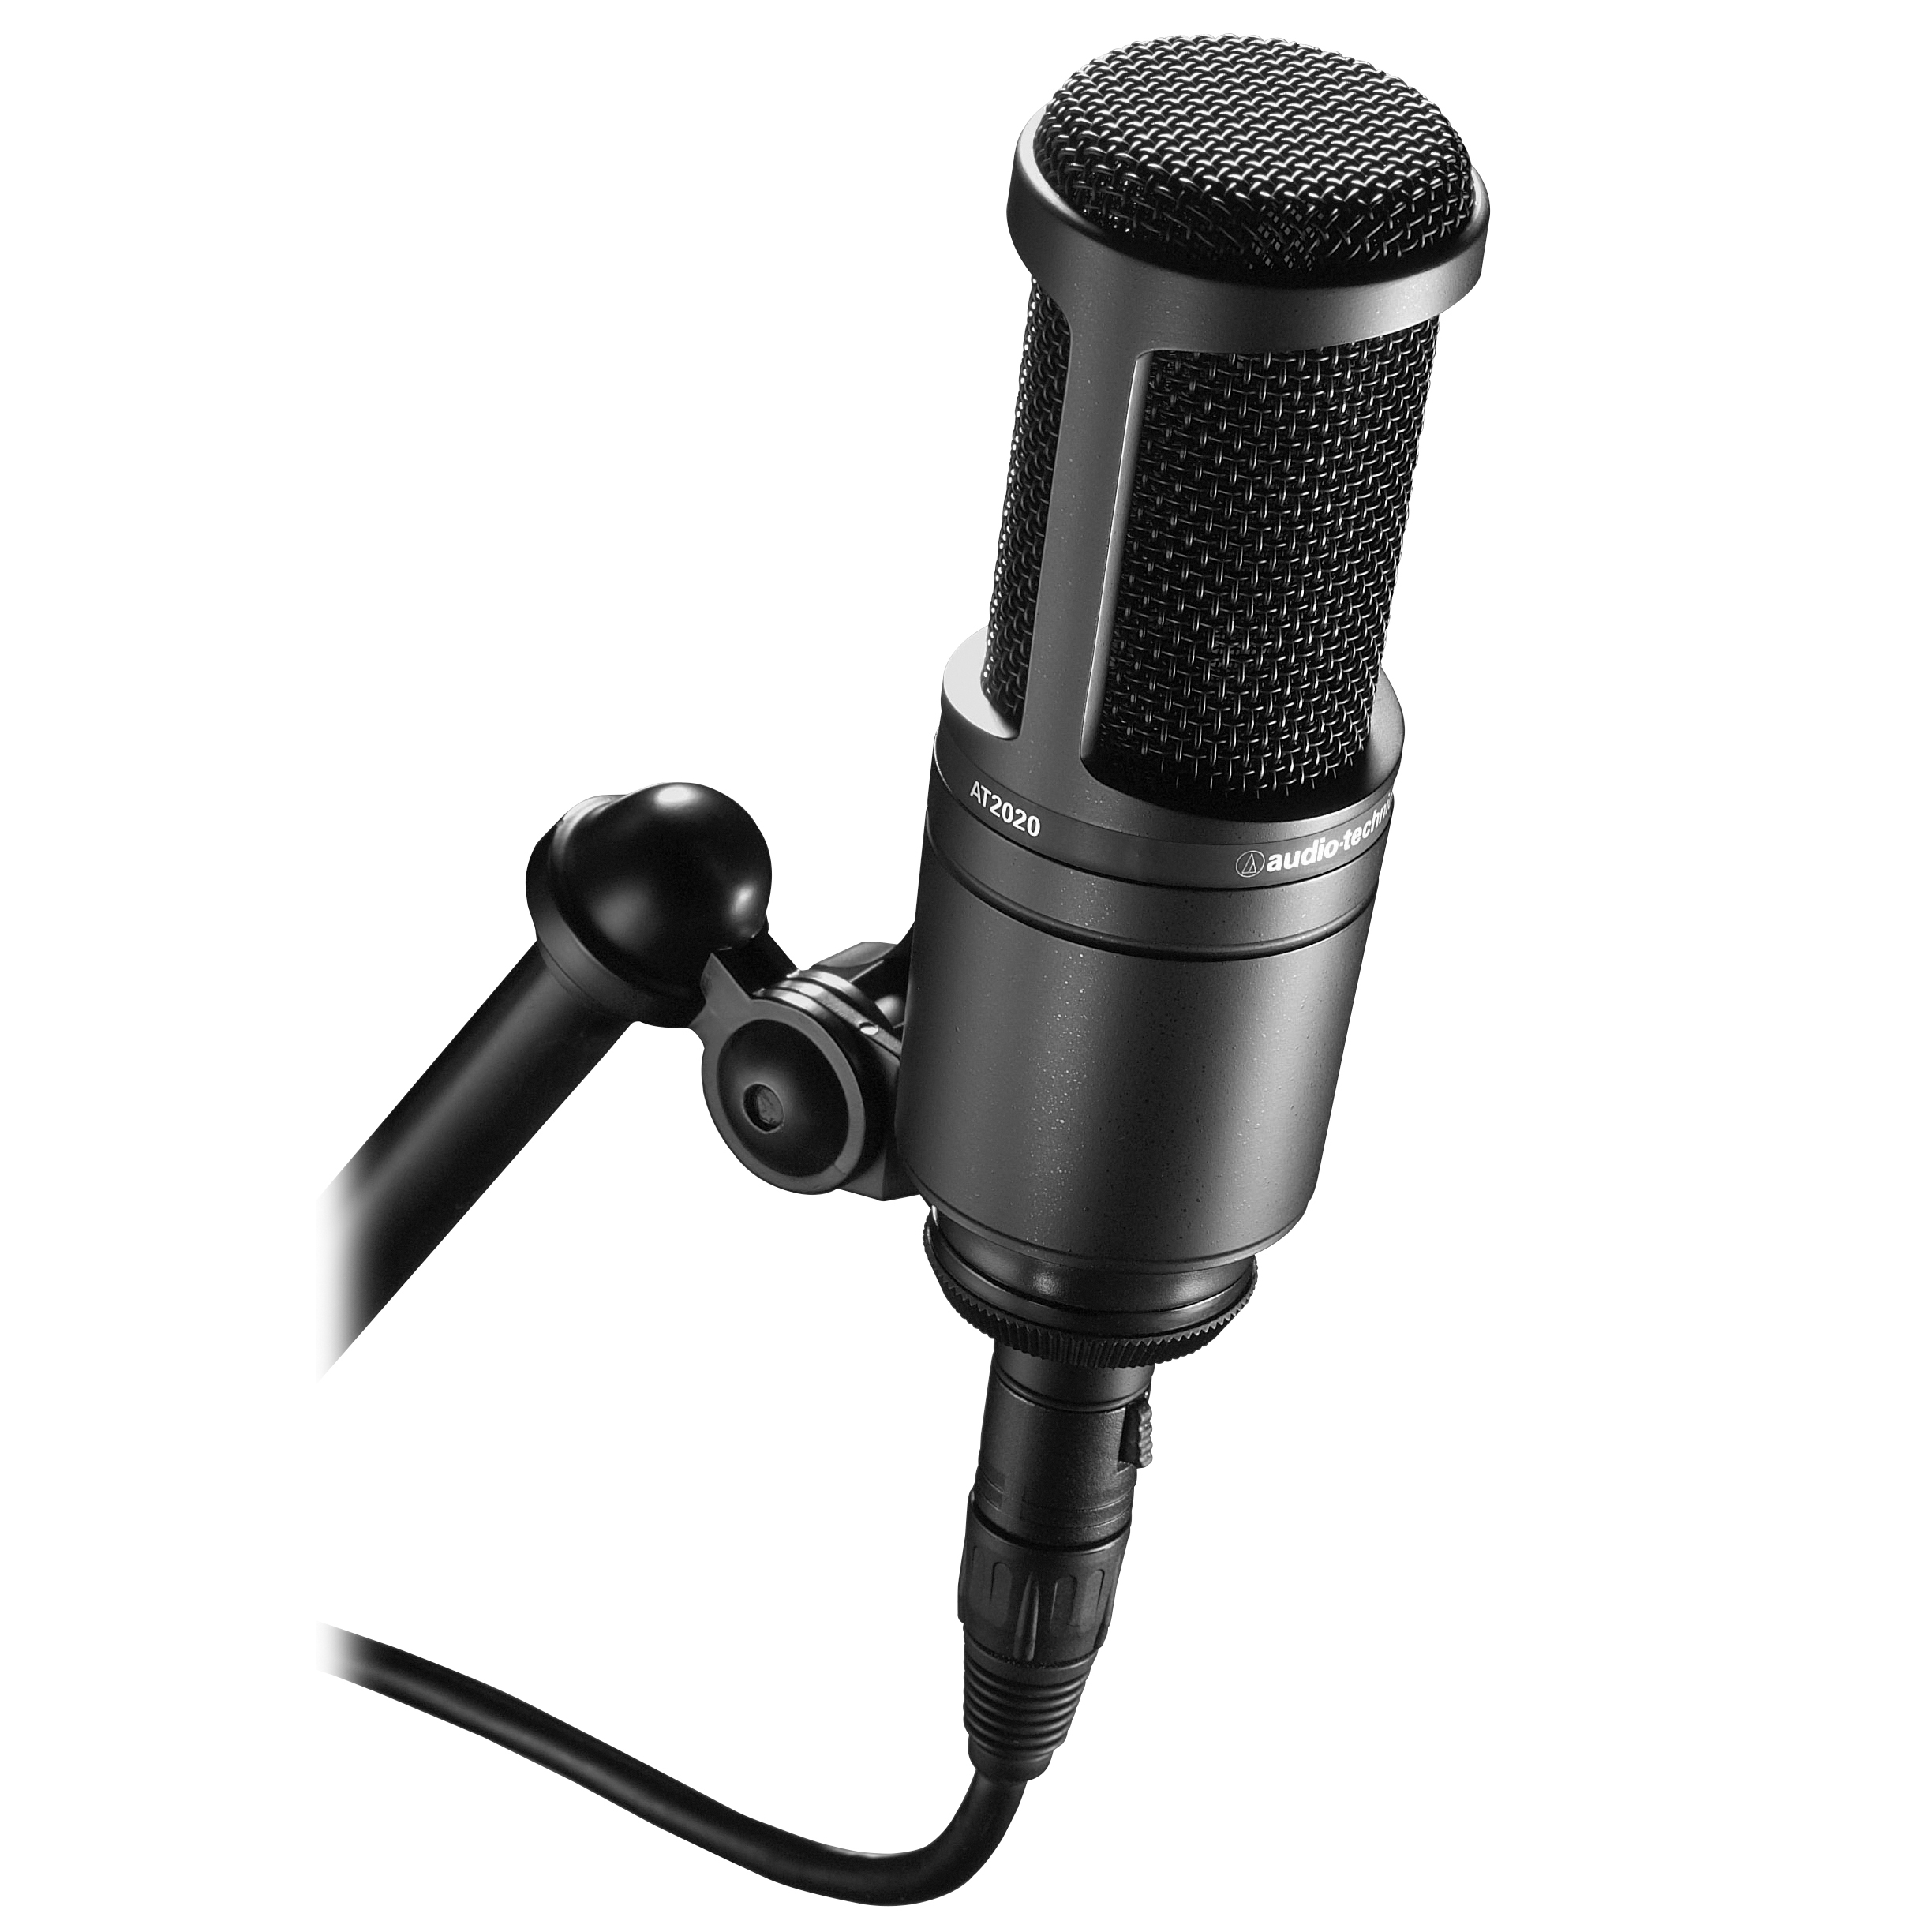 Yeti pro USB microphone